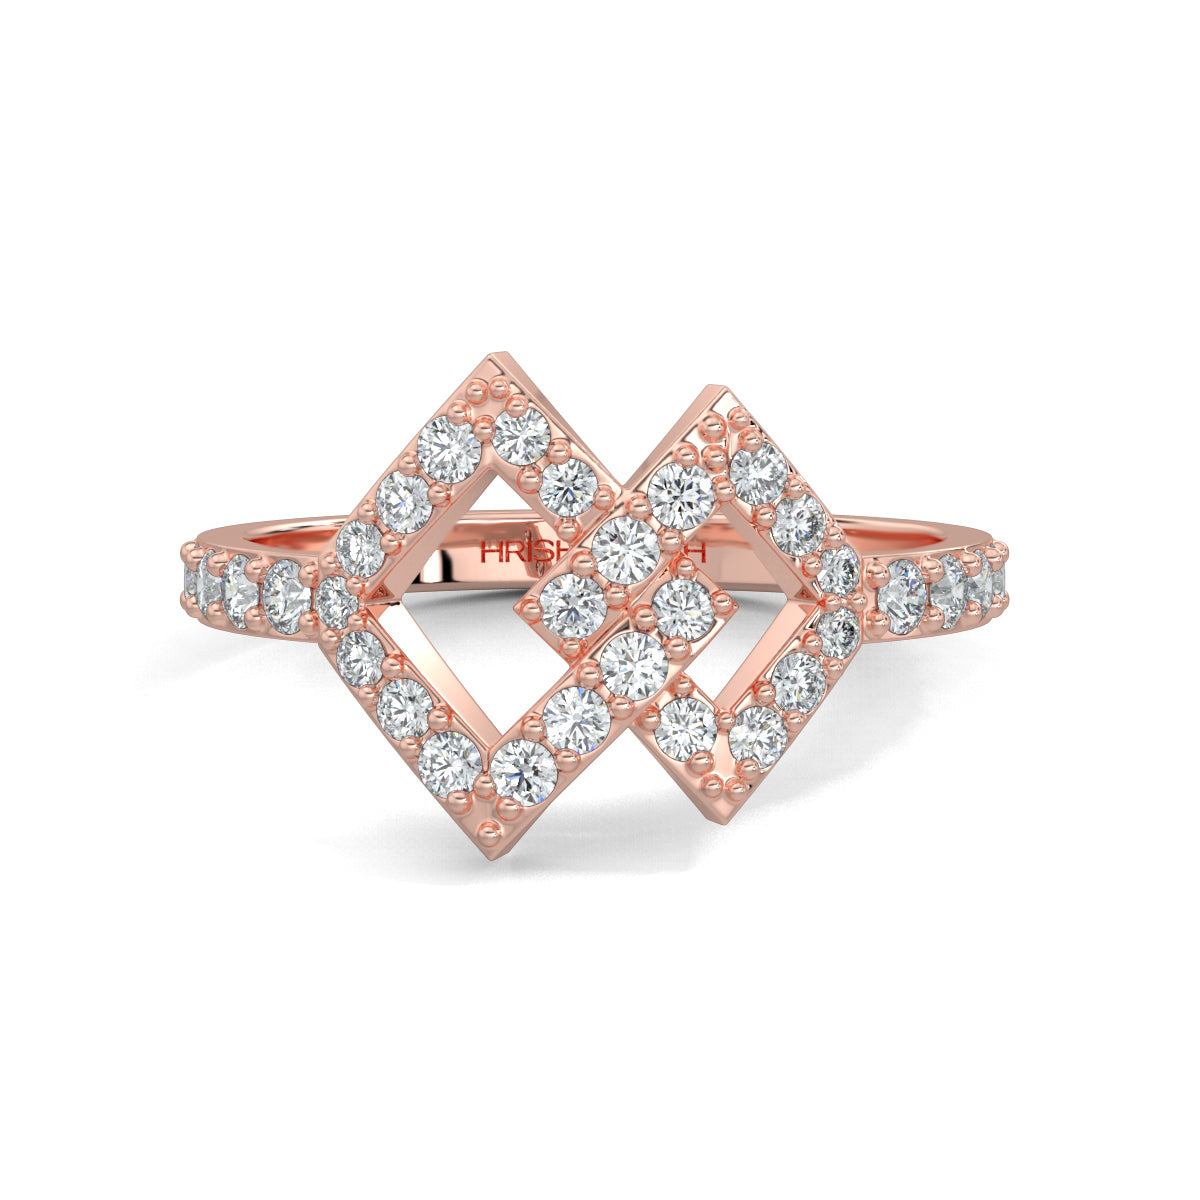 Rose Gold, Diamond Ring, Natural diamond ring, Lab-grown diamond ring, intertwined diamond design, round diamond accents, unity symbol ring, elegant diamond band.